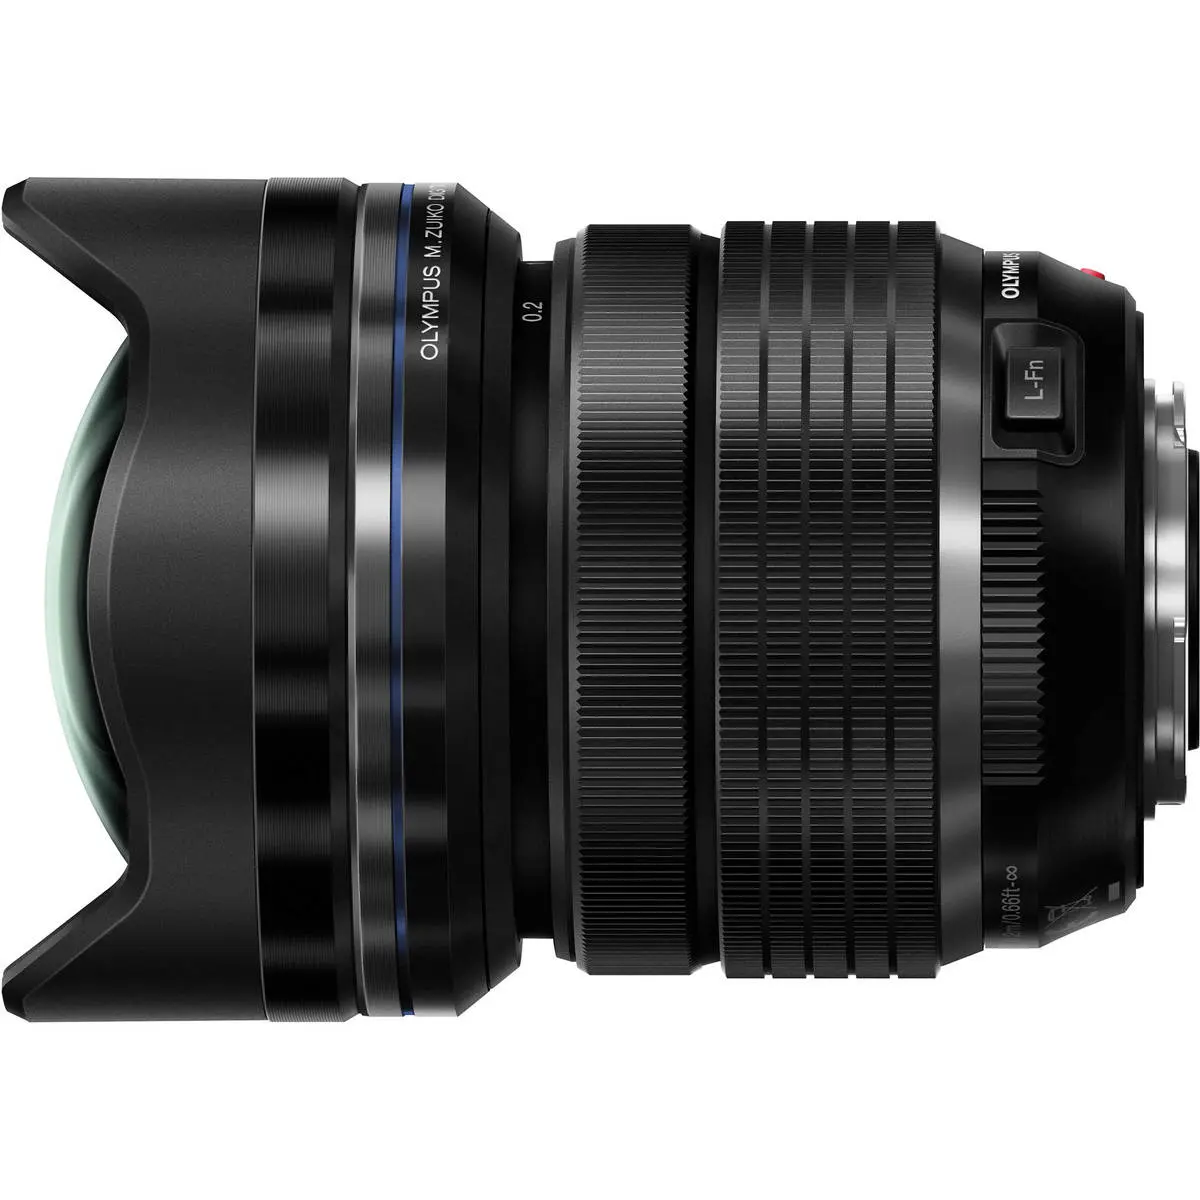 1. Olympus M.ZUIKO DIGITAL ED 7-14mm F2.8 PRO Lens